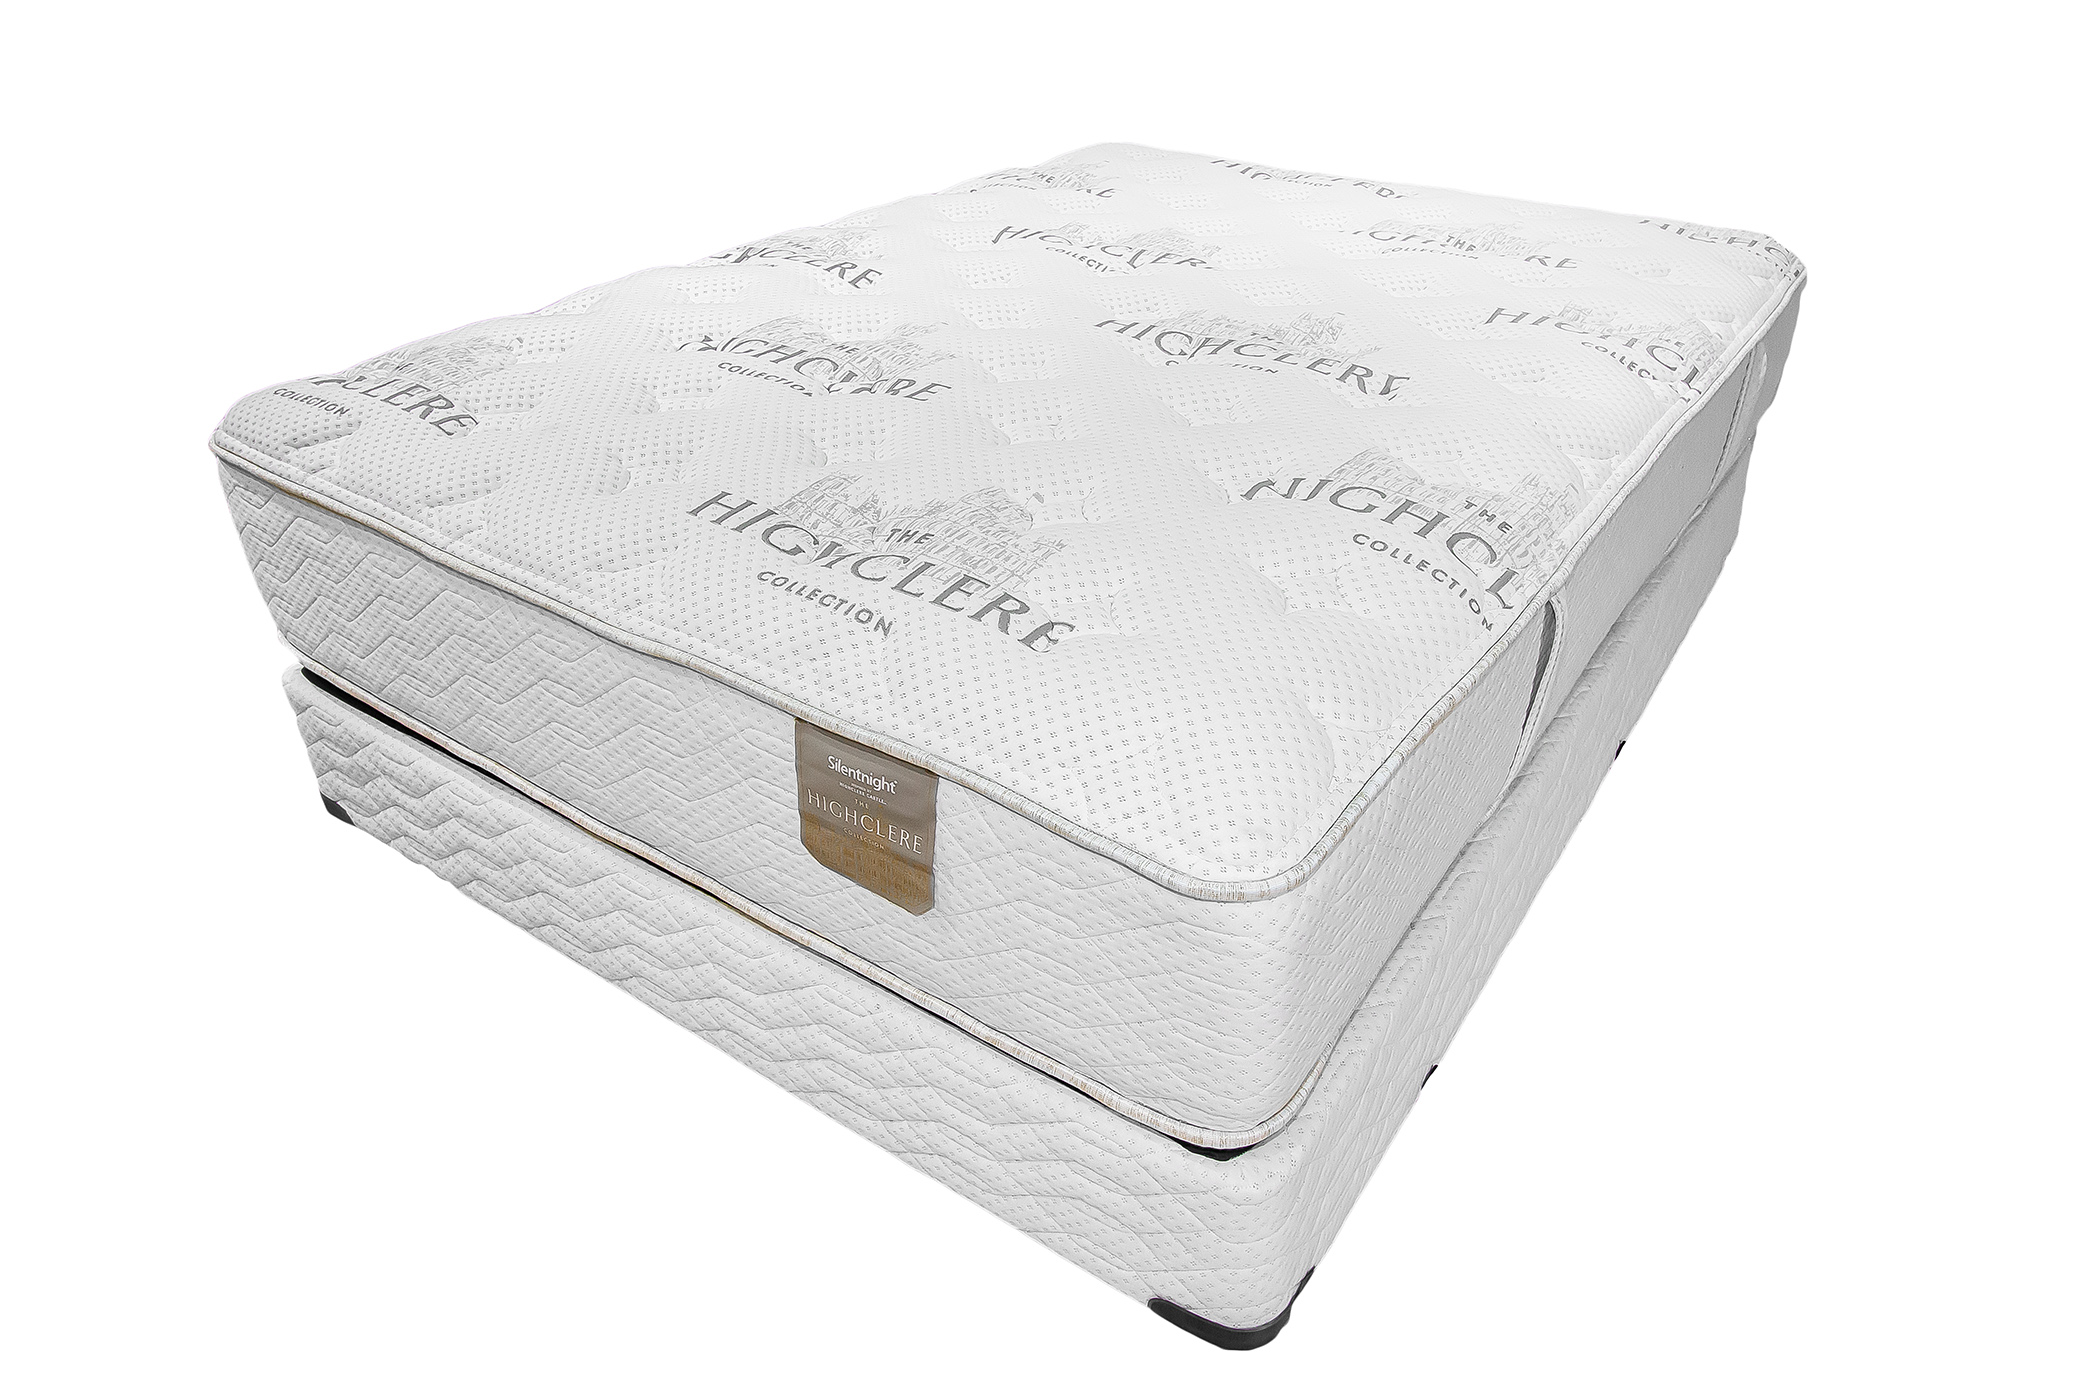 A white Highclere mattress at Mattress Connection